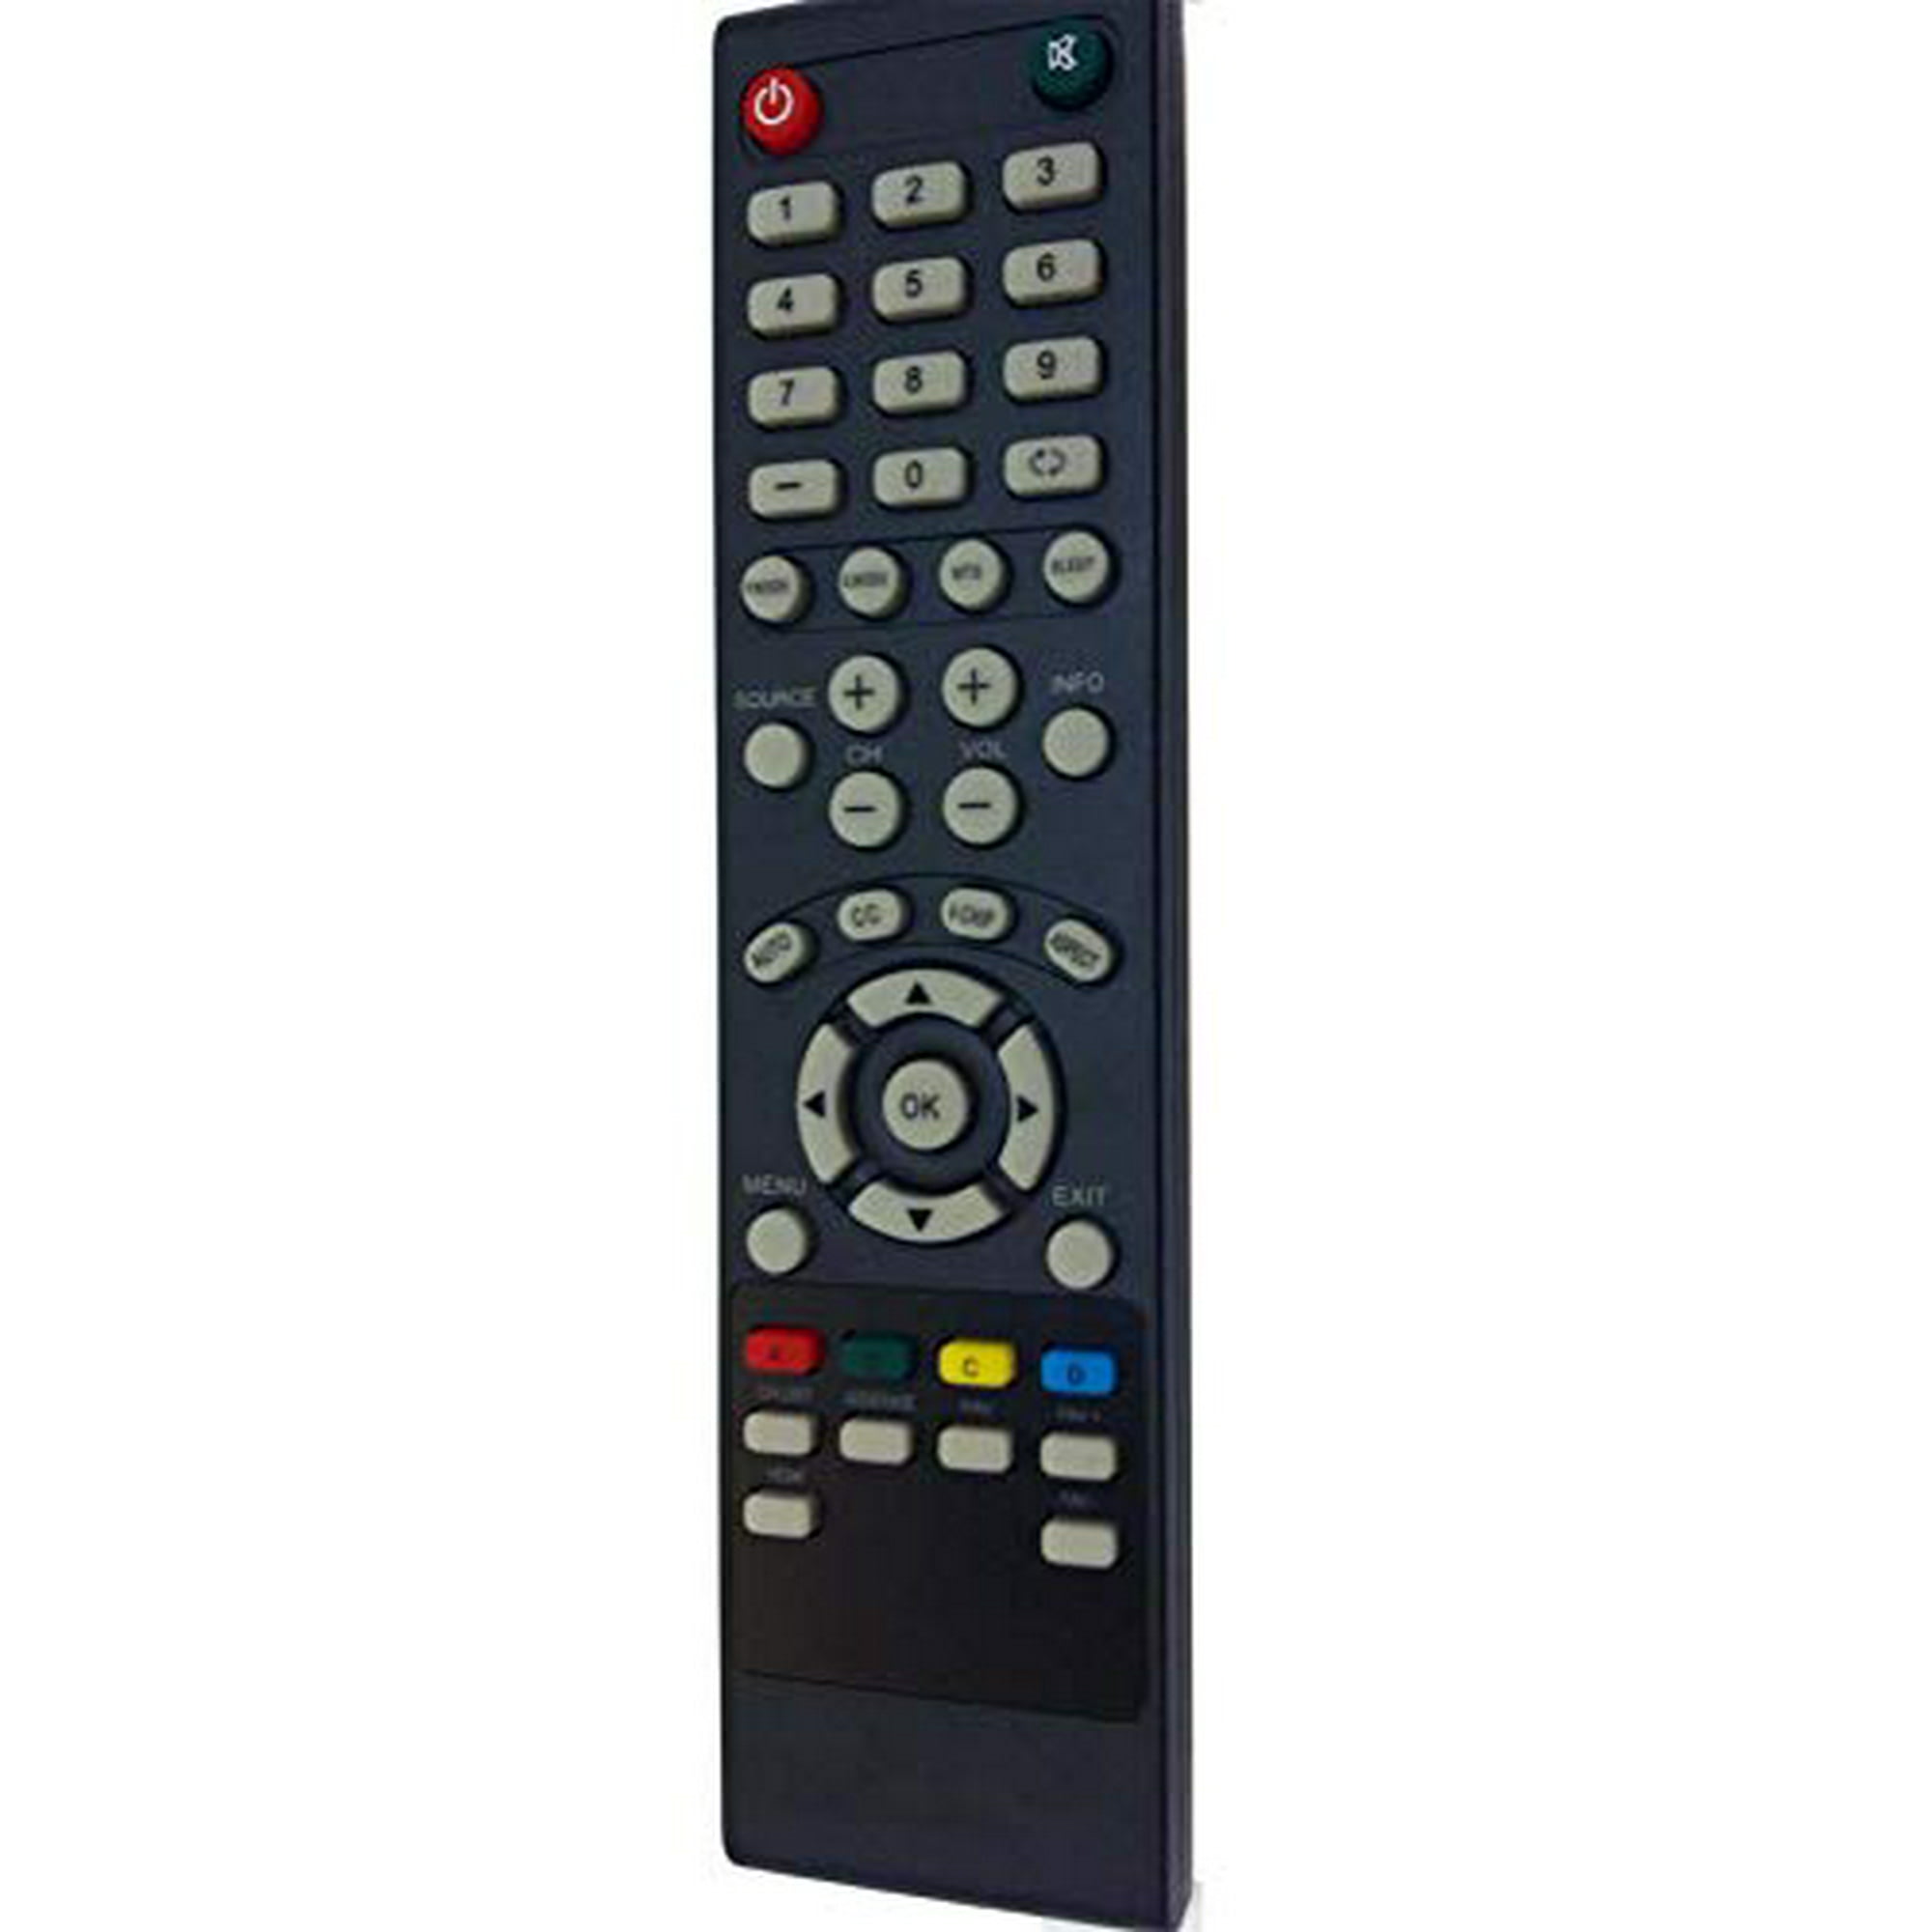 New Remote Control fit for SEIKI TV SE55GY19 SE65UY04 SE22FE01 SE65GY25  SE40FY27 SE32FY22 TV SE24FE01-W SE19HE01 | Walmart Canada